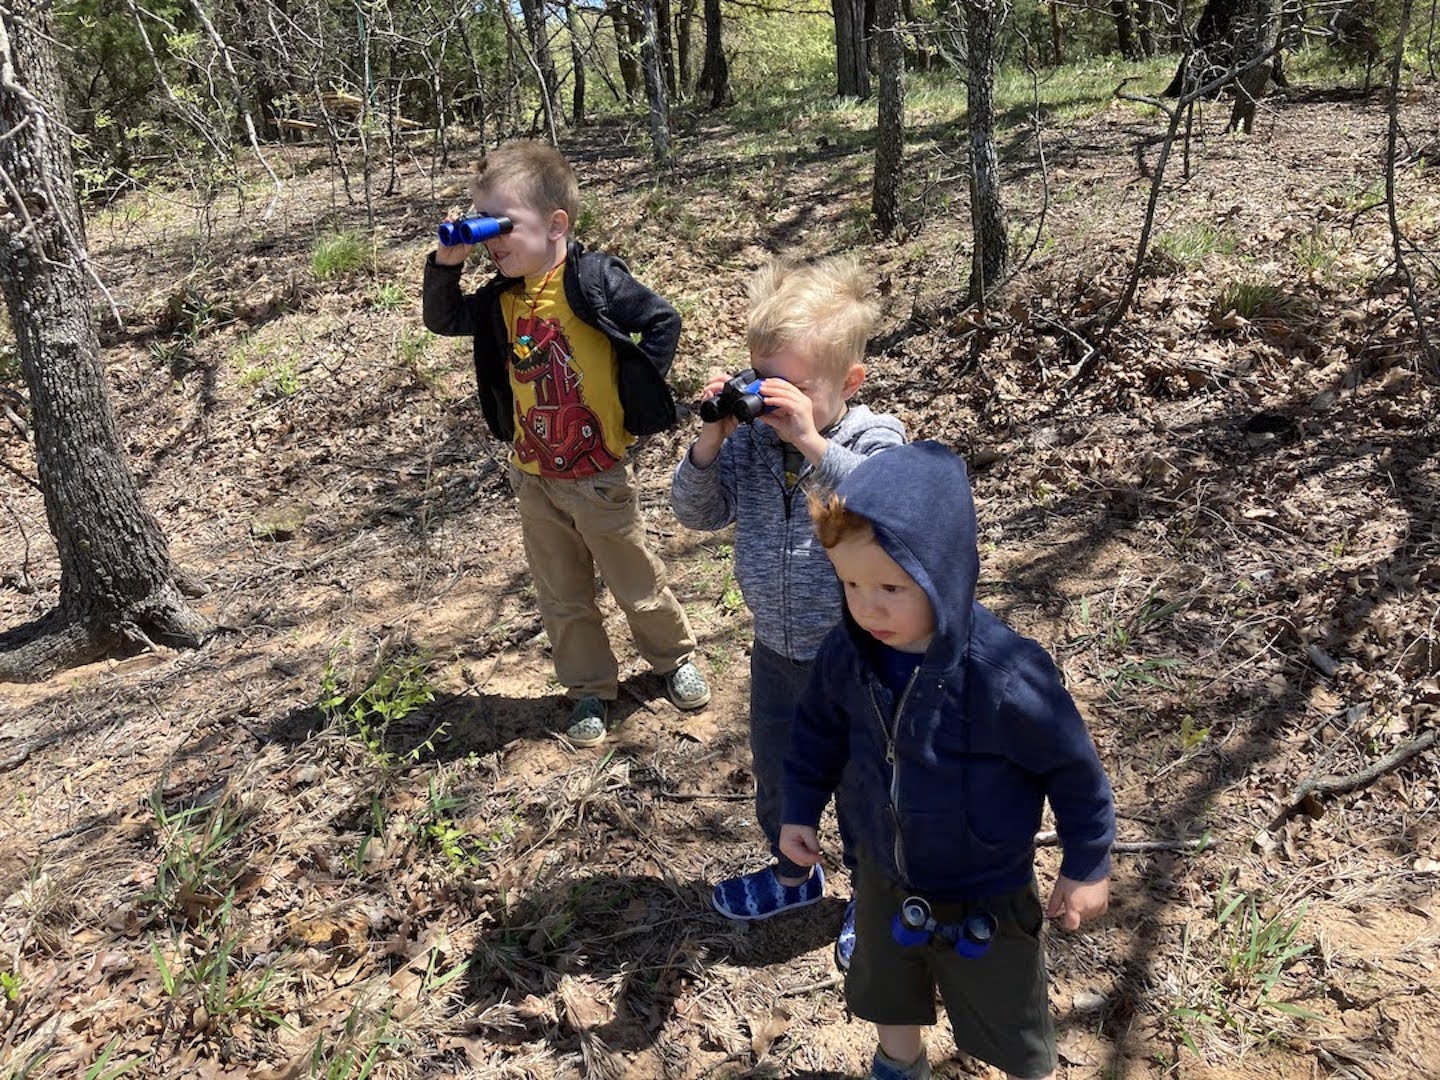 3 young boys looking through binoculars